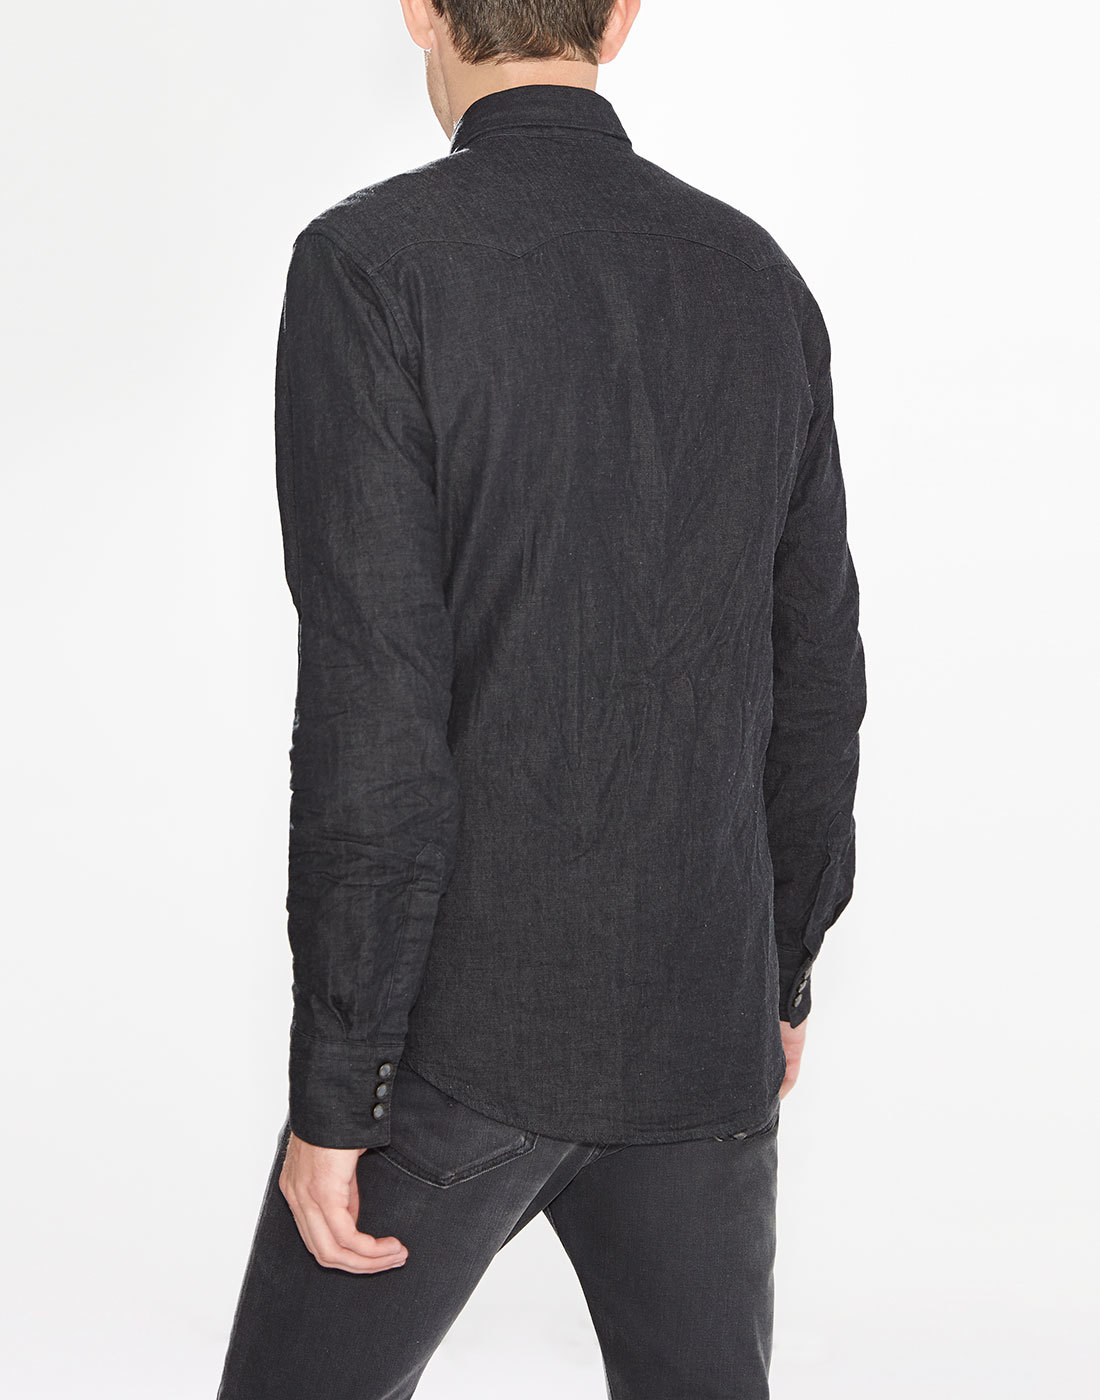 LEVI'S® Retro Mod 70s Sawtooth Denim Western Shirt in Black